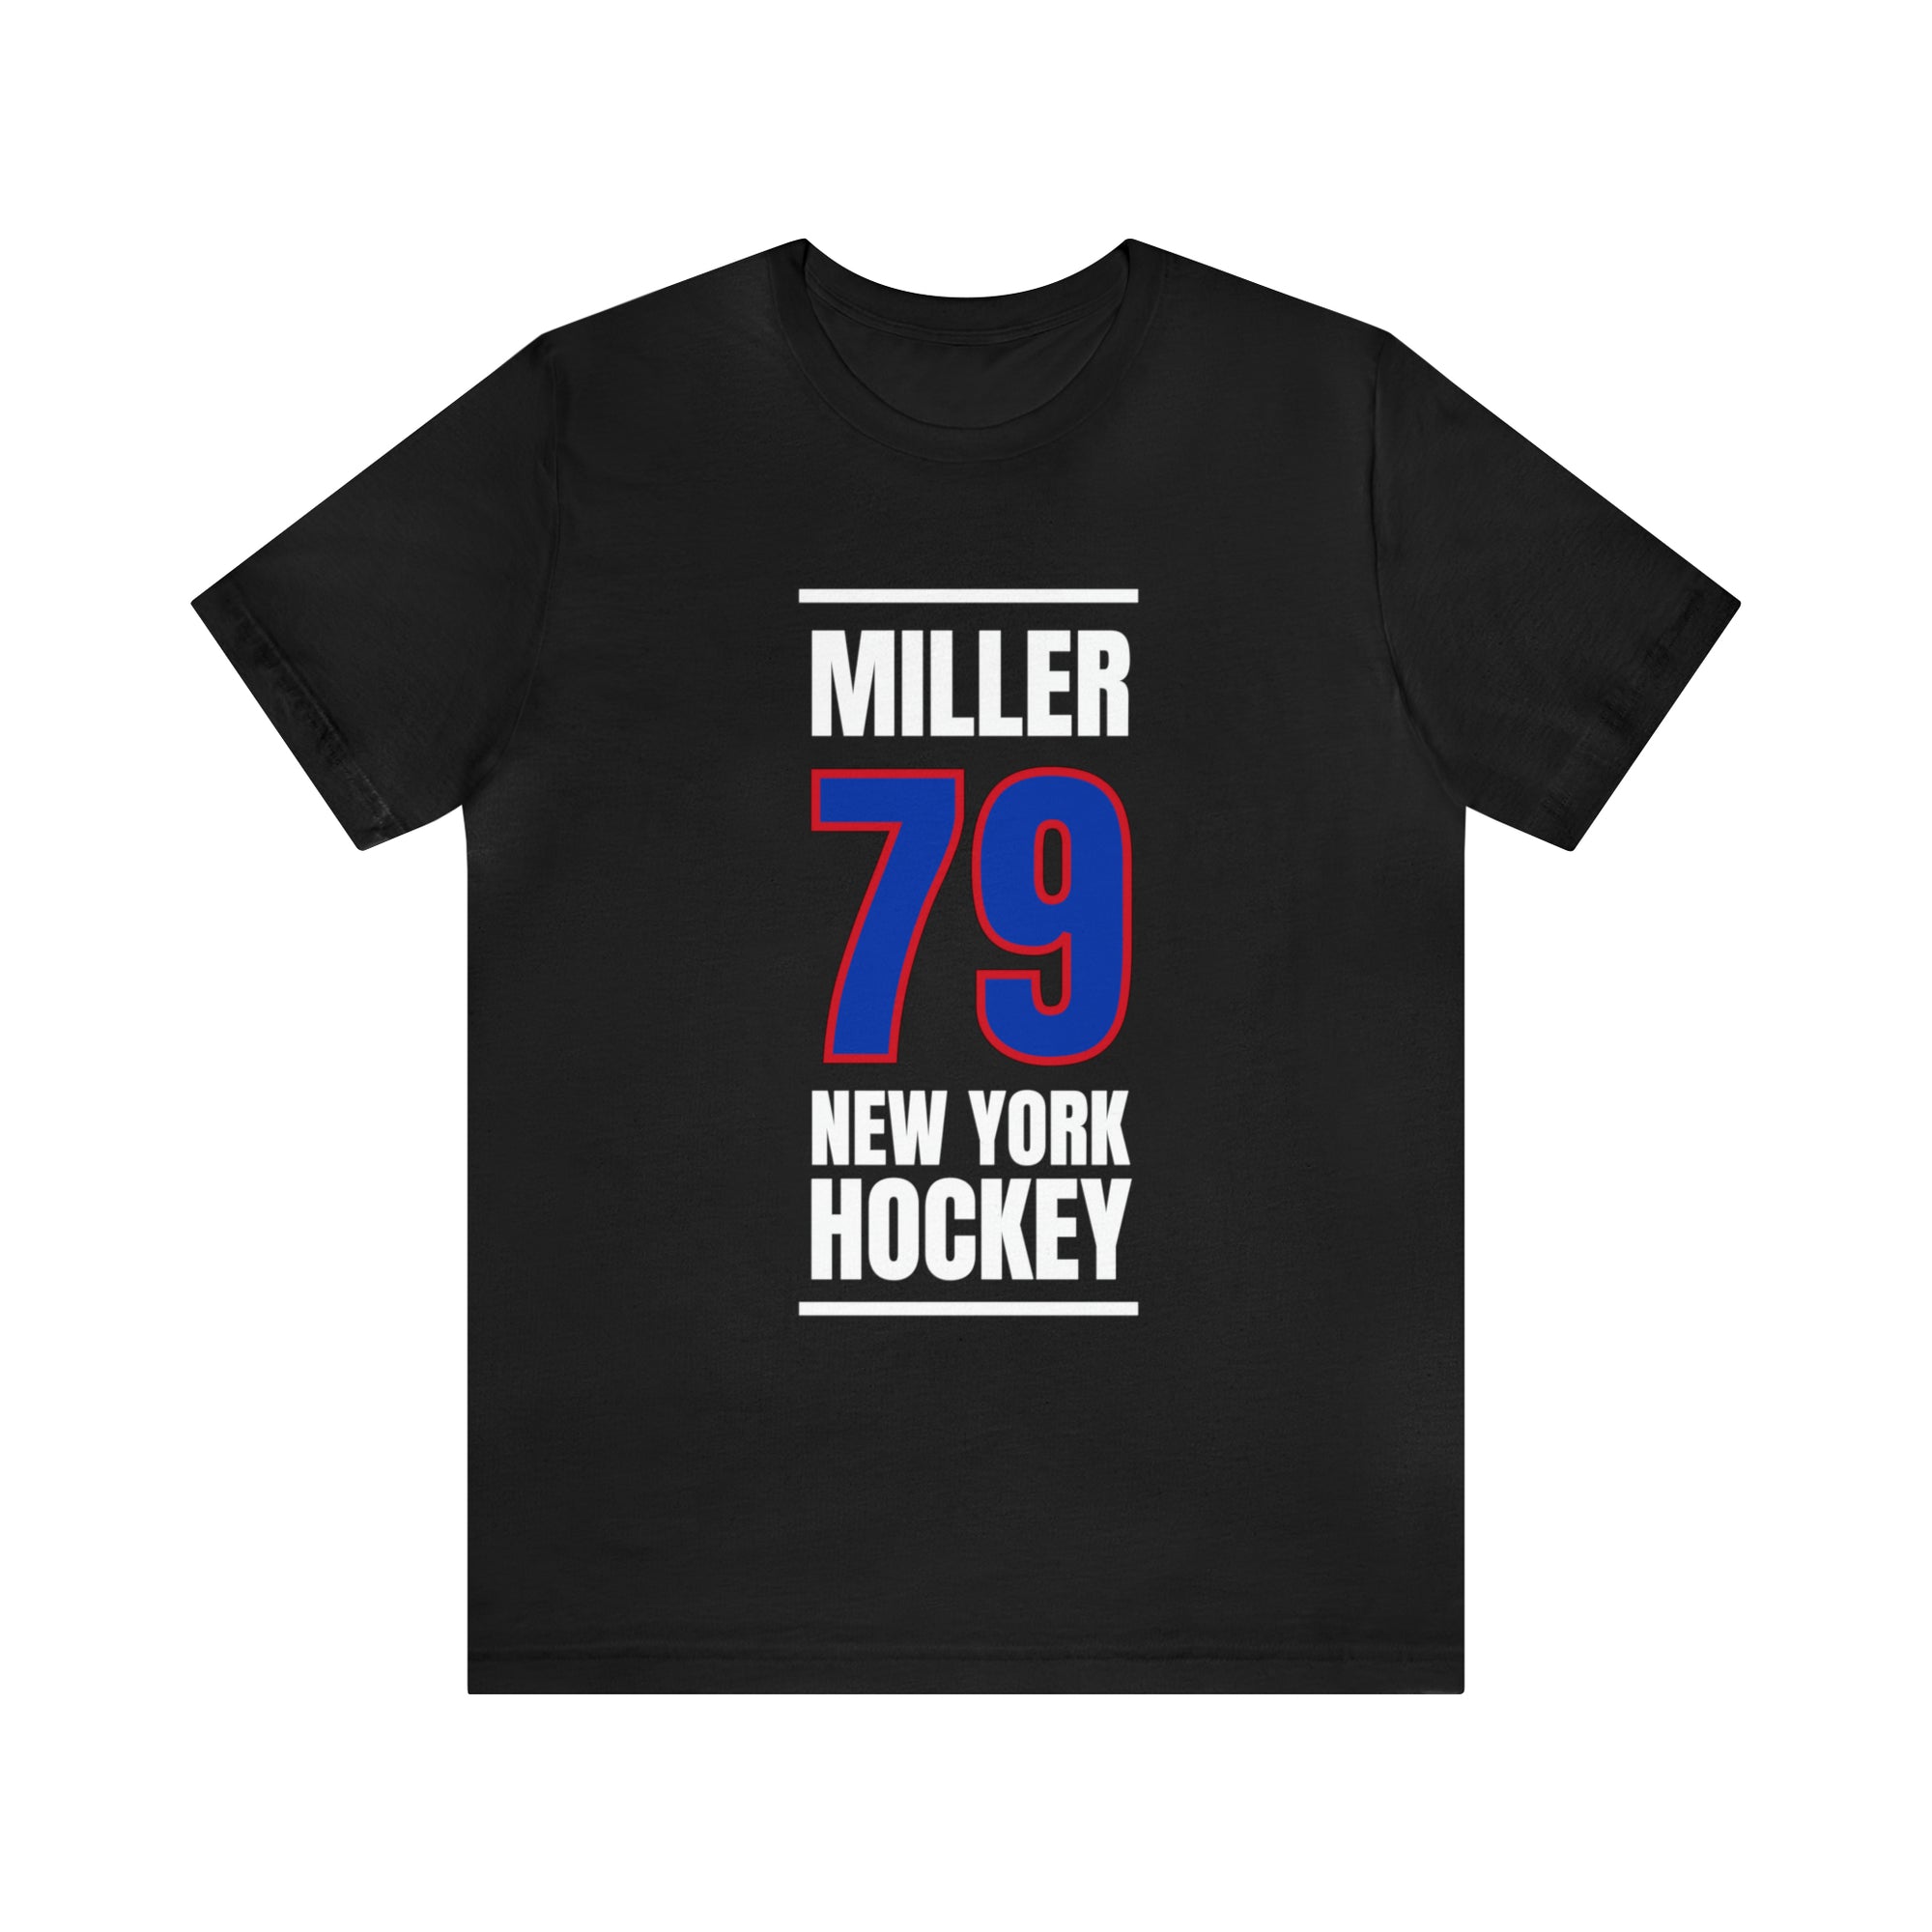 Miller 79 New York Hockey Royal Blue Vertical Design Unisex T-Shirt